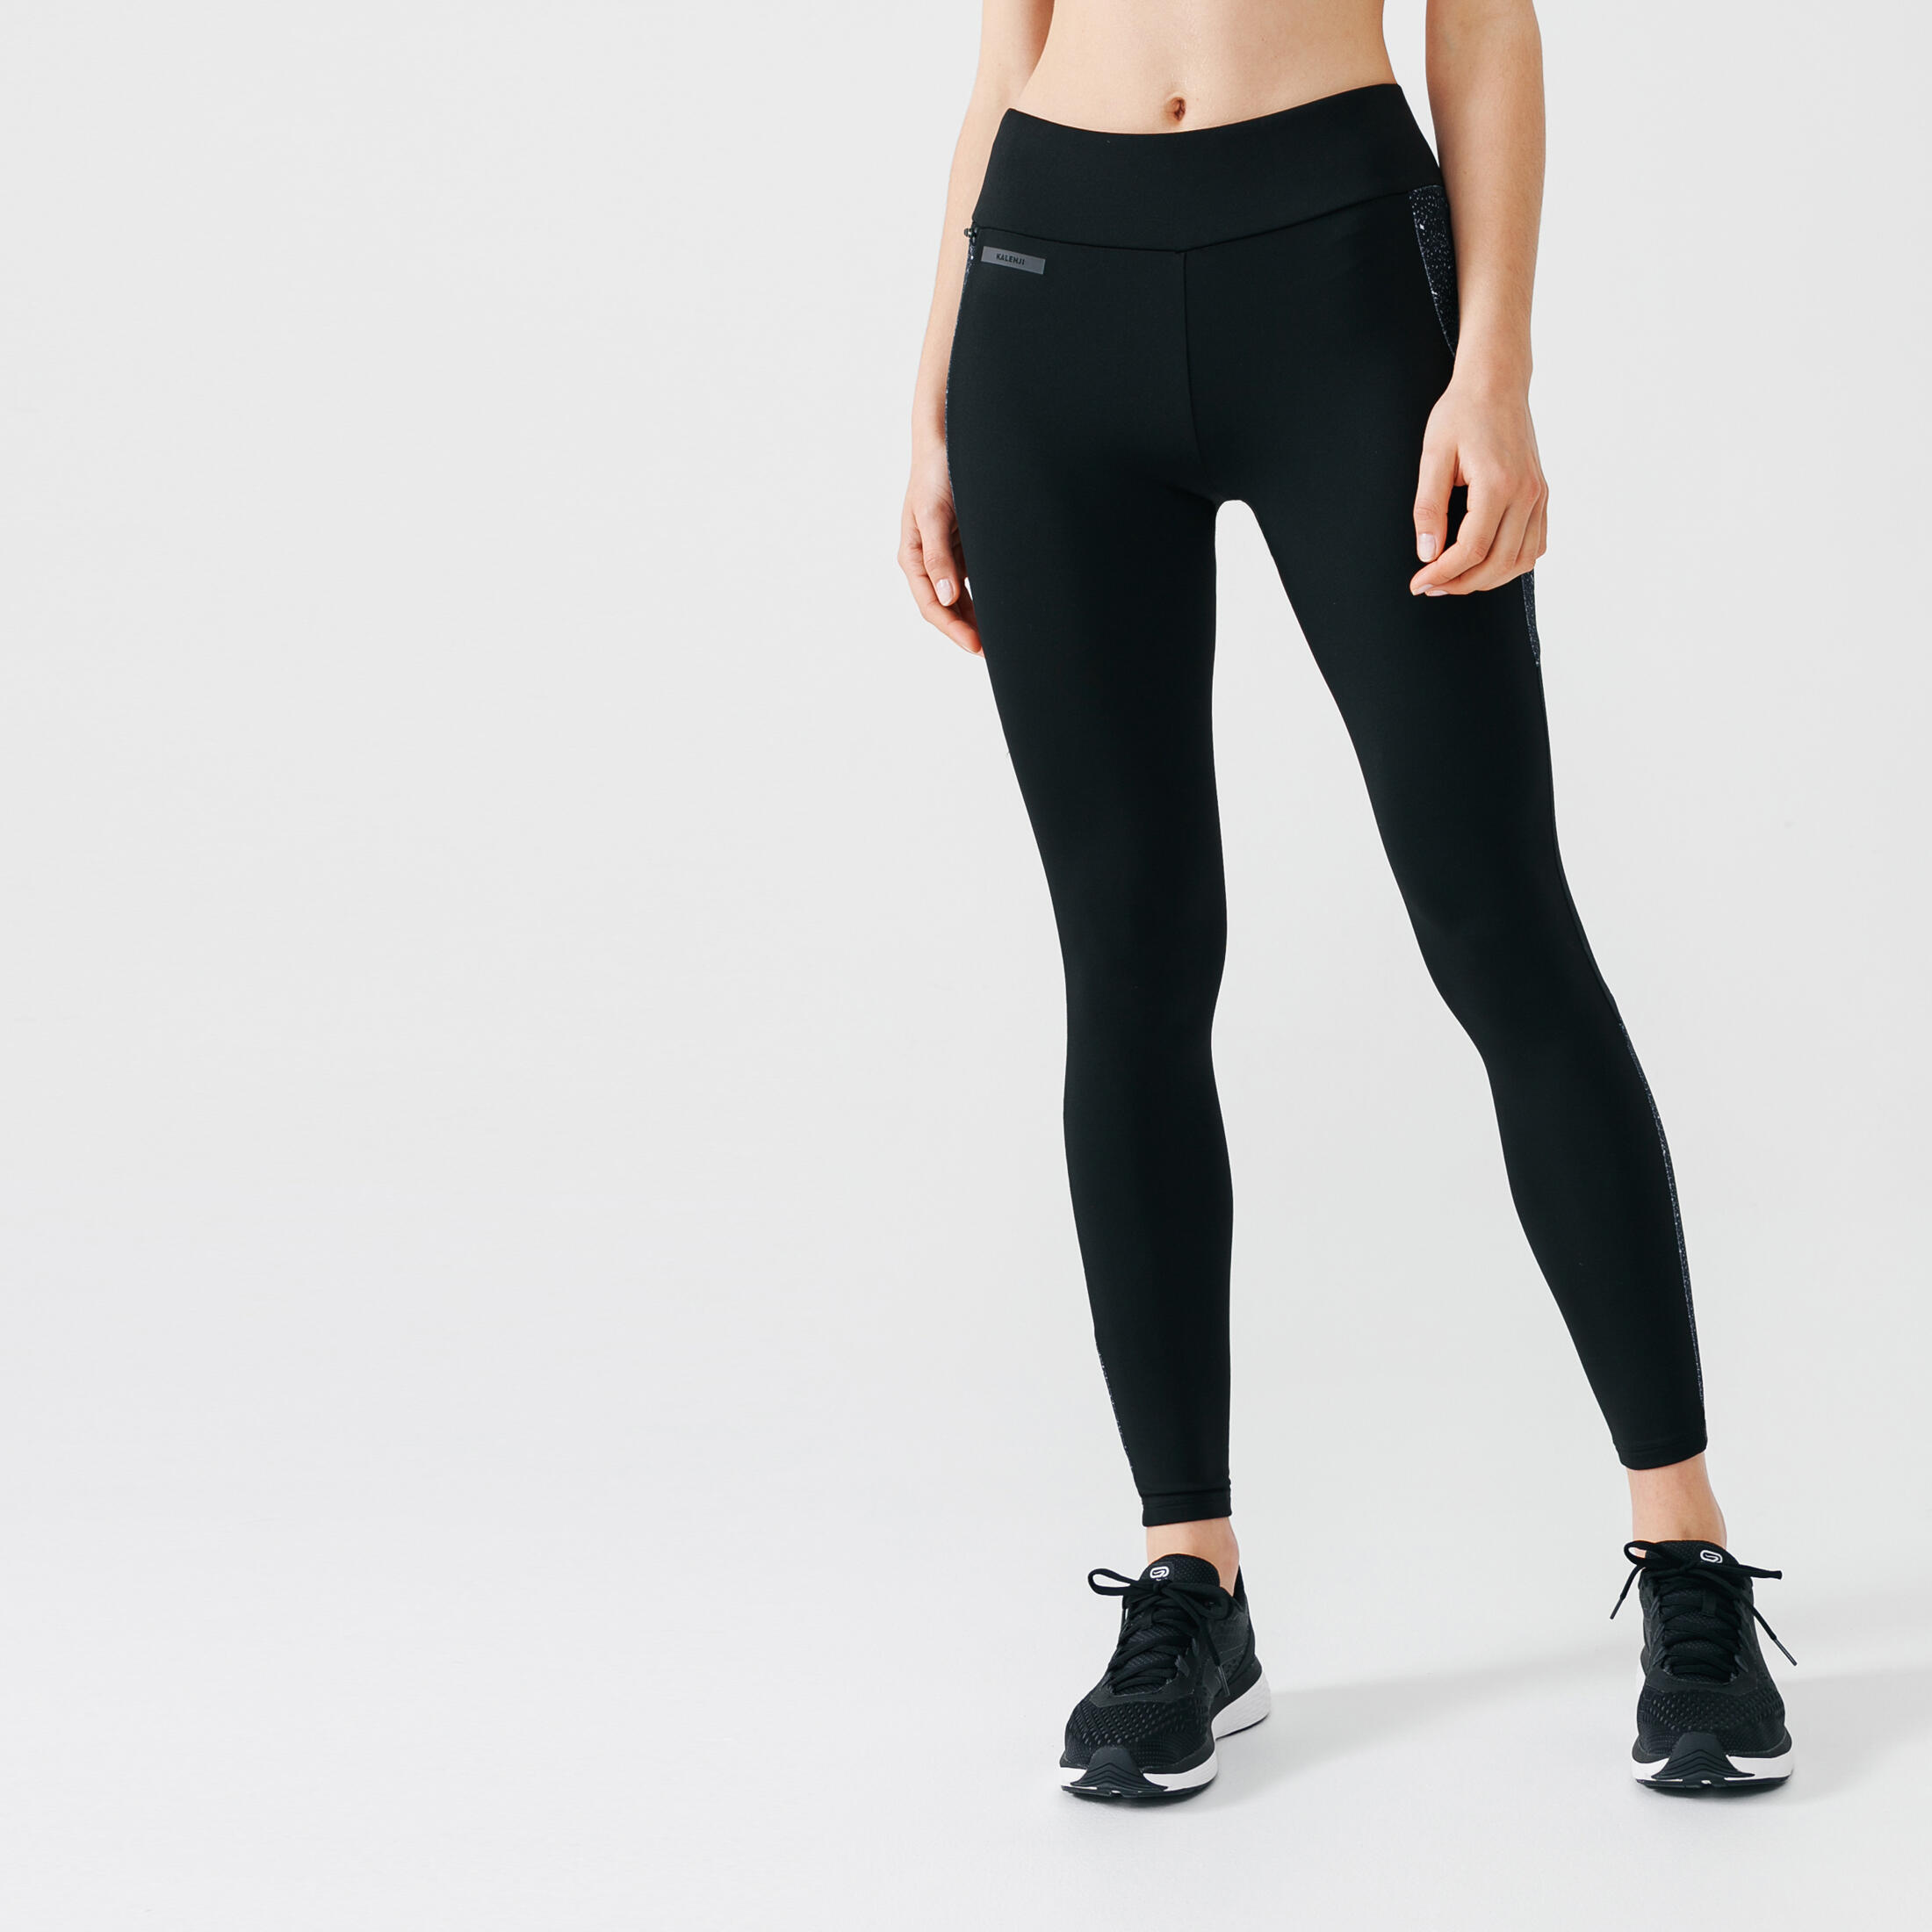 Women’s Long Running Leggings - Warm+ Black/Grey